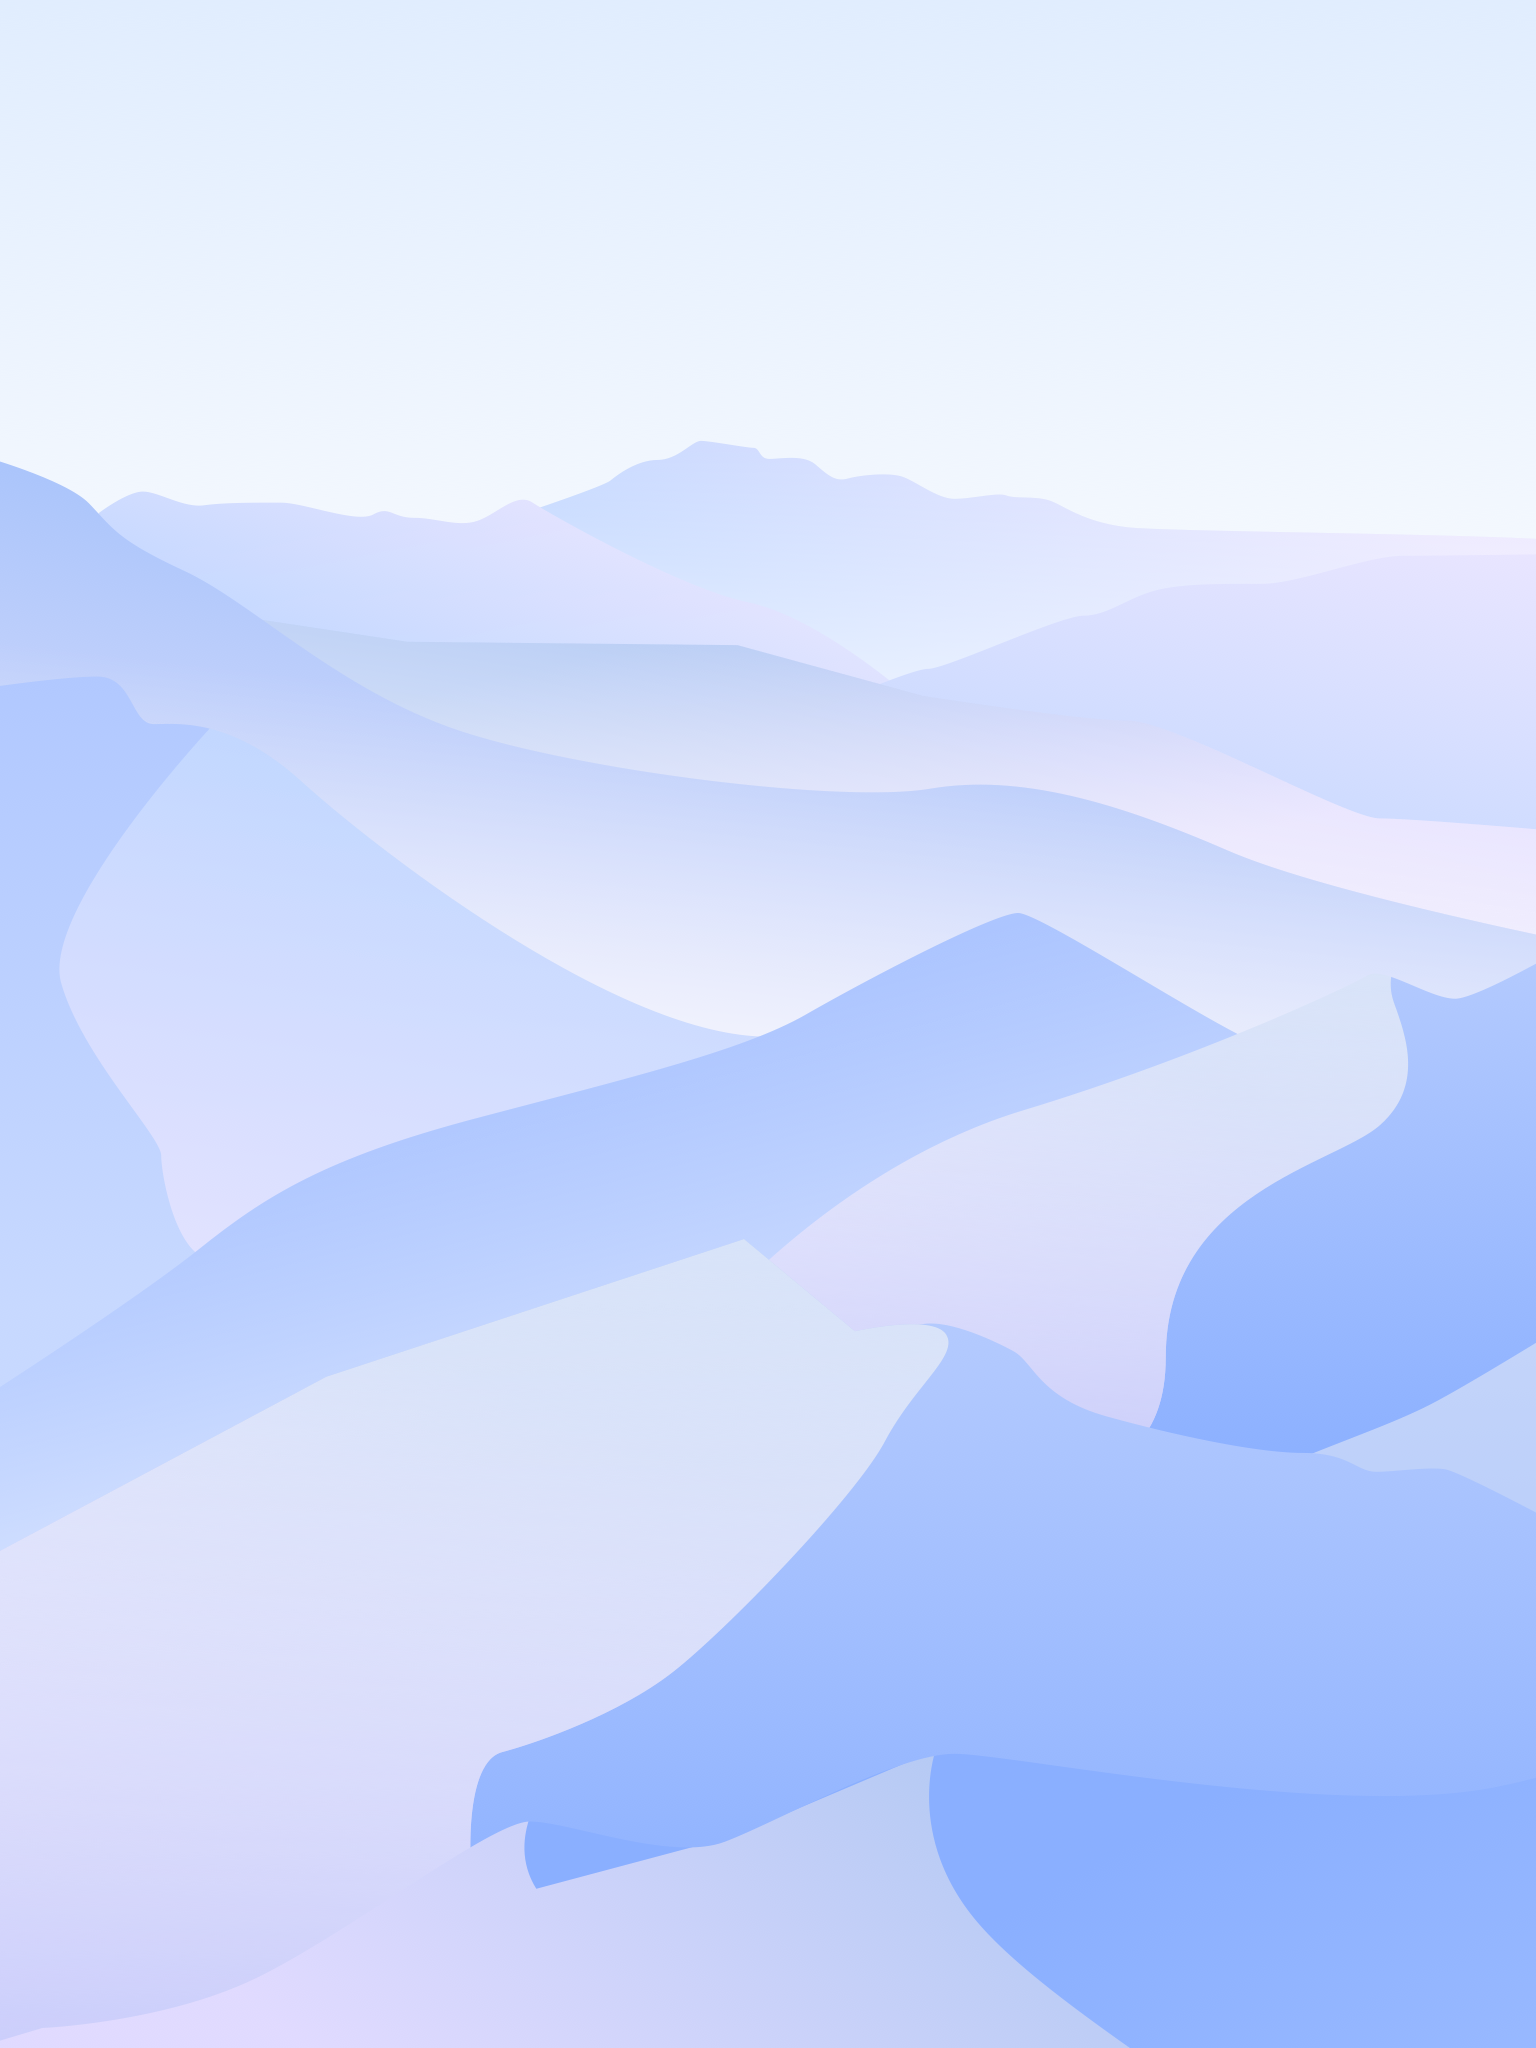 Minimalist Ice landscape Wallpaper